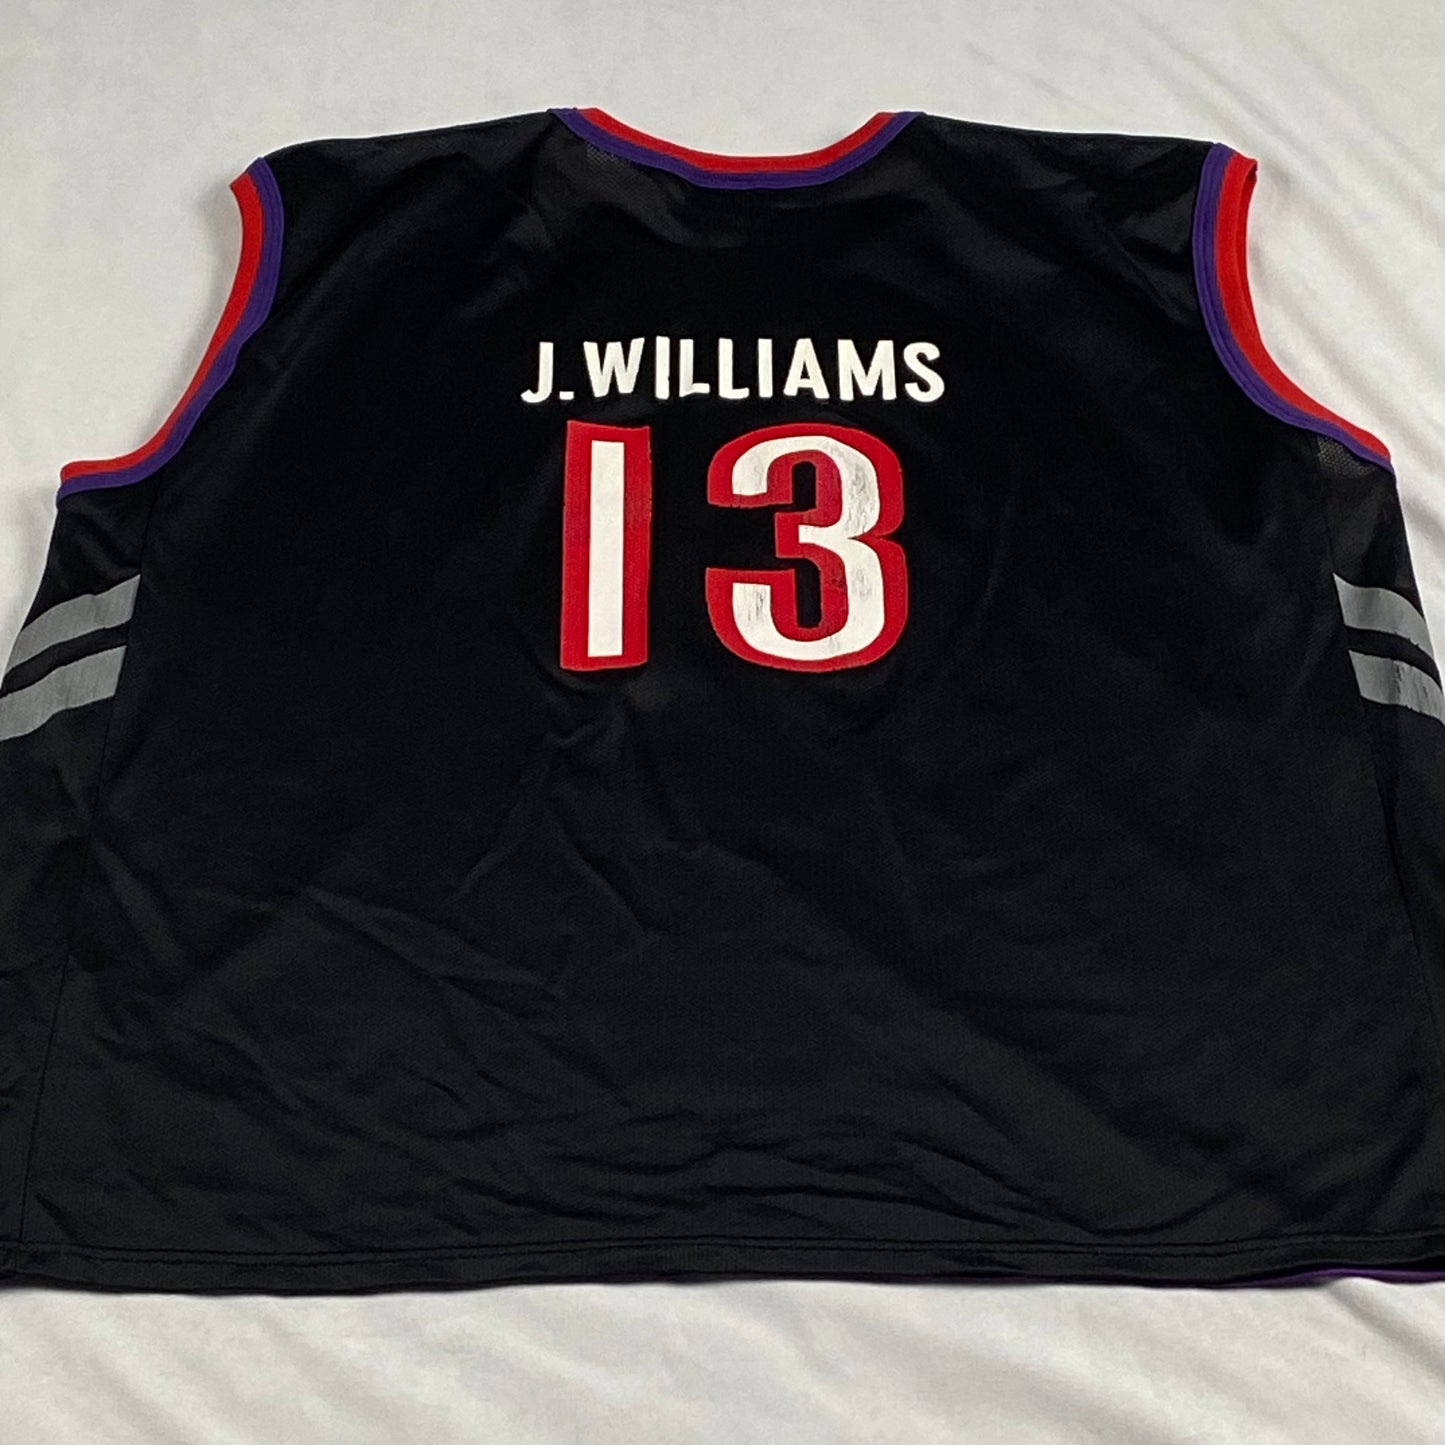 Toronto Raptors Jerome Williams Champion Replica NBA Basketball Jersey